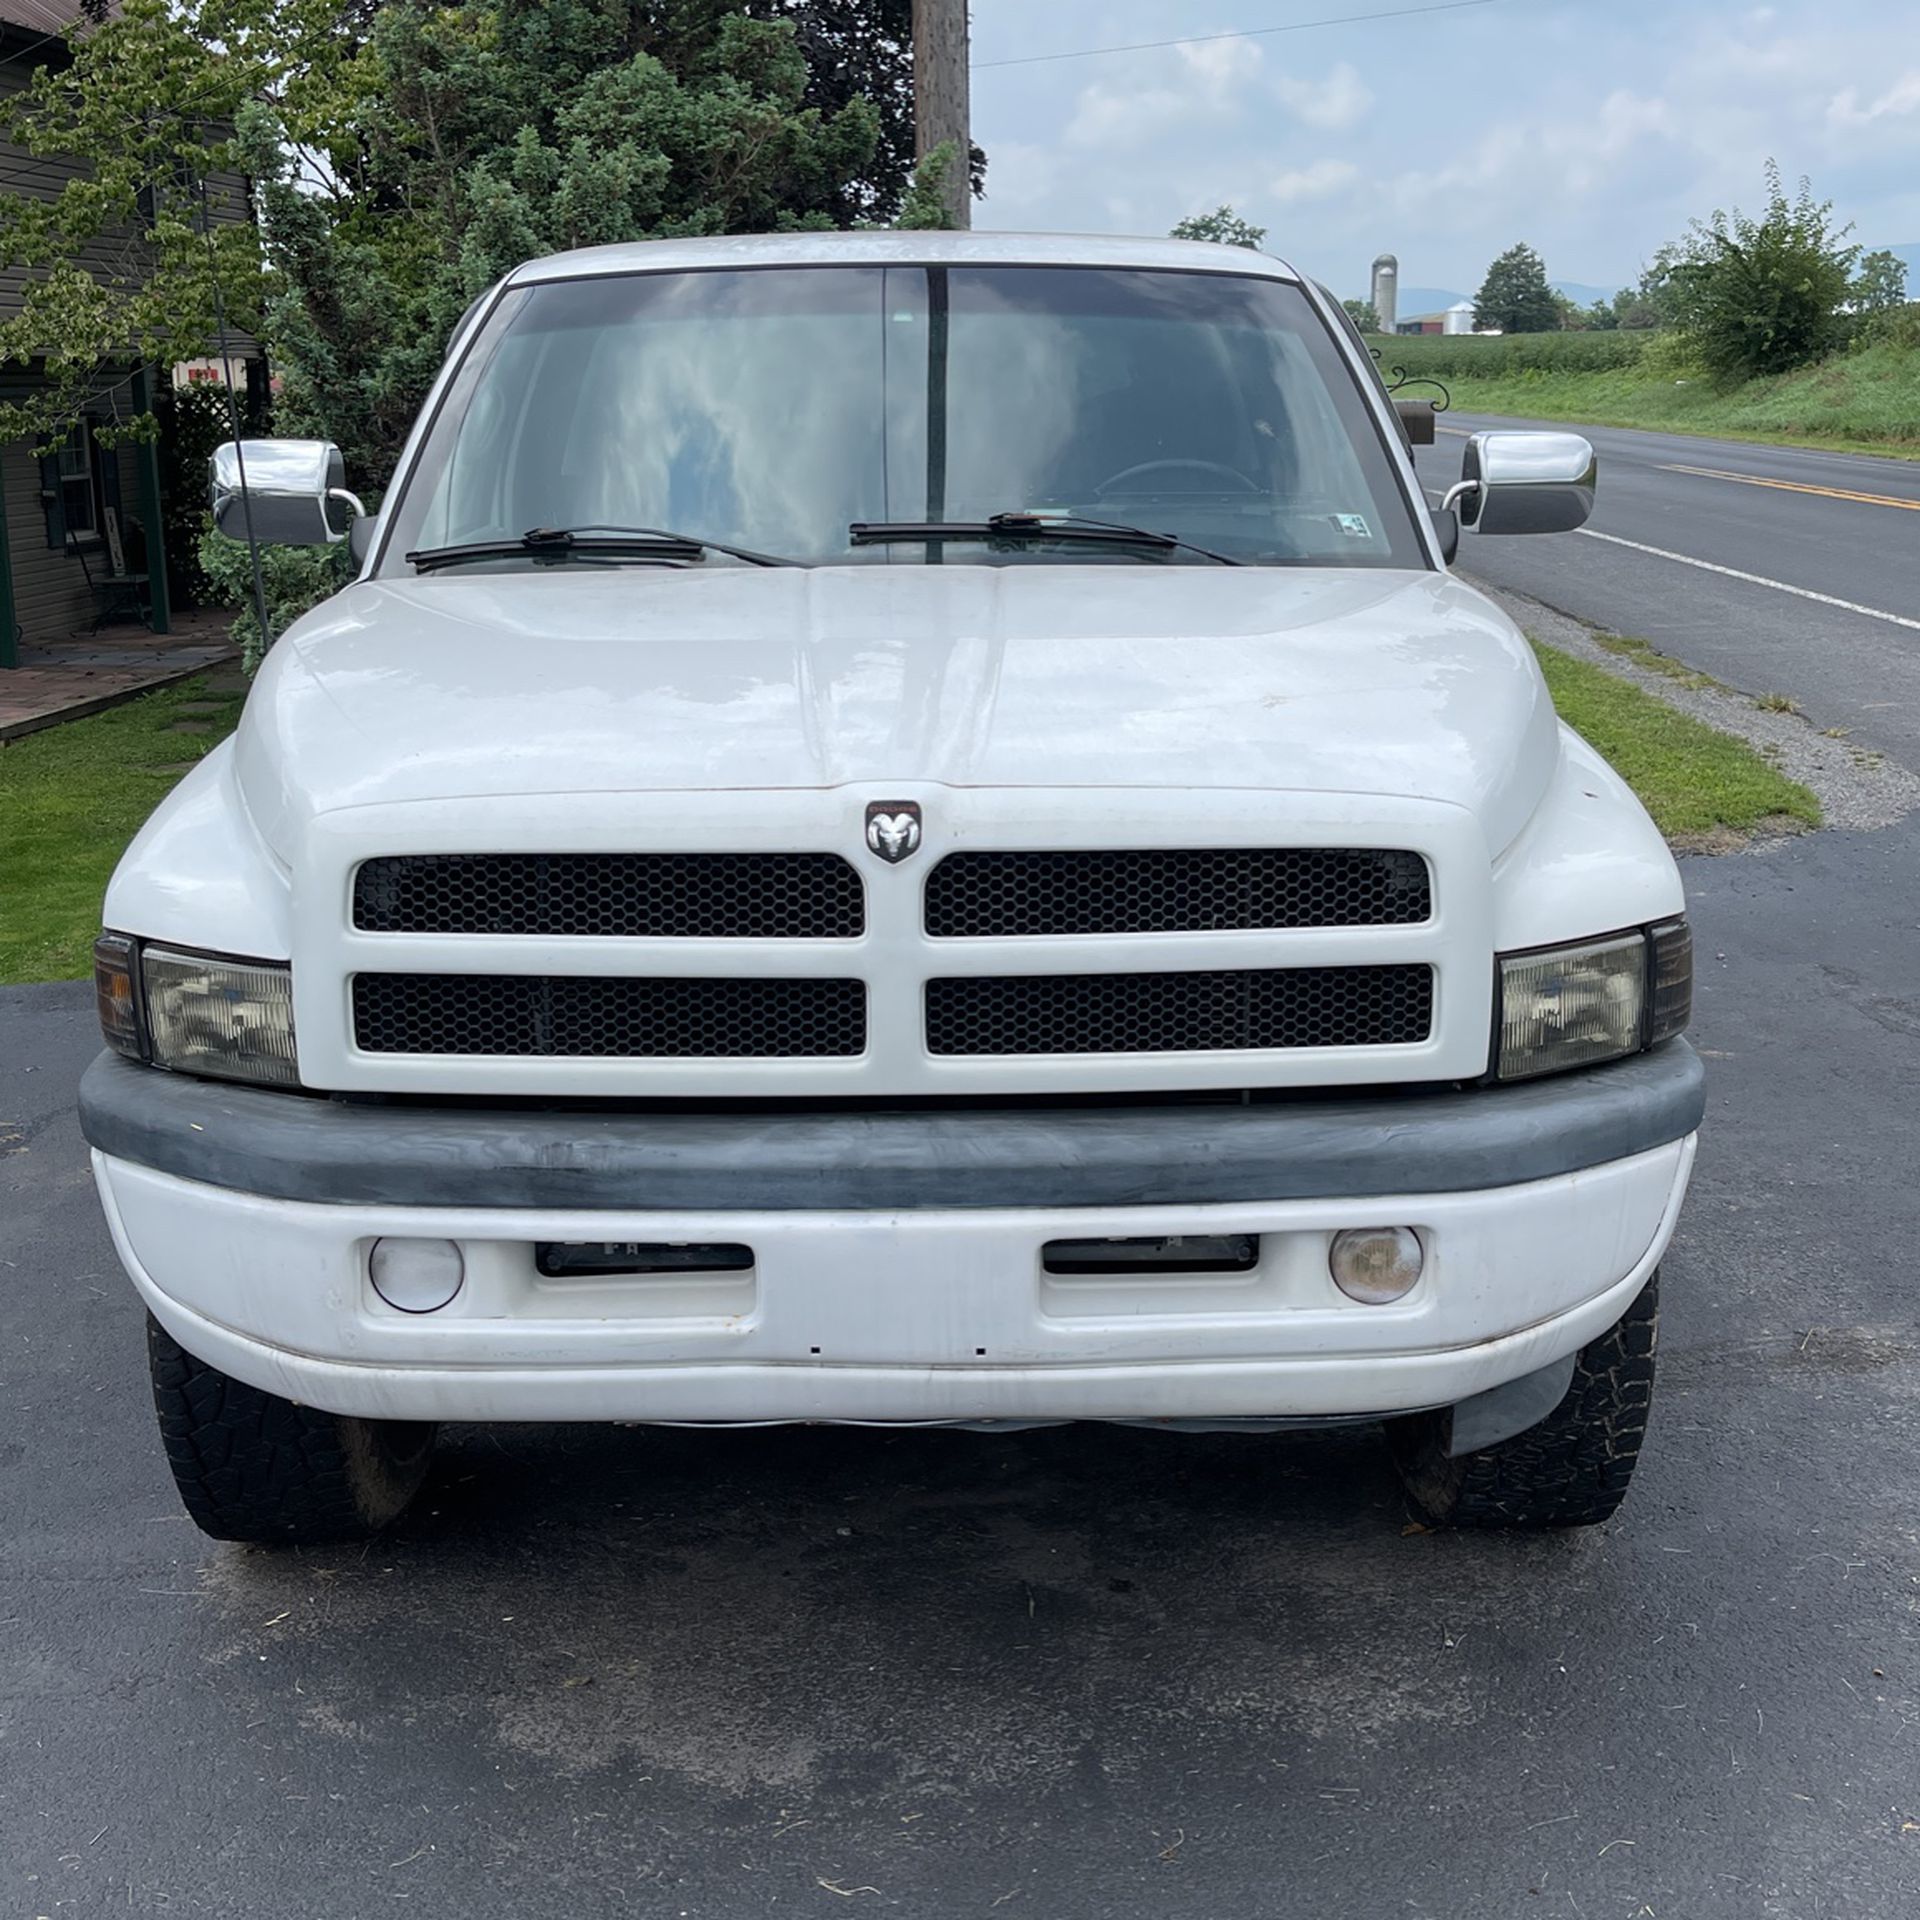 1997 Dodge Ram 1500